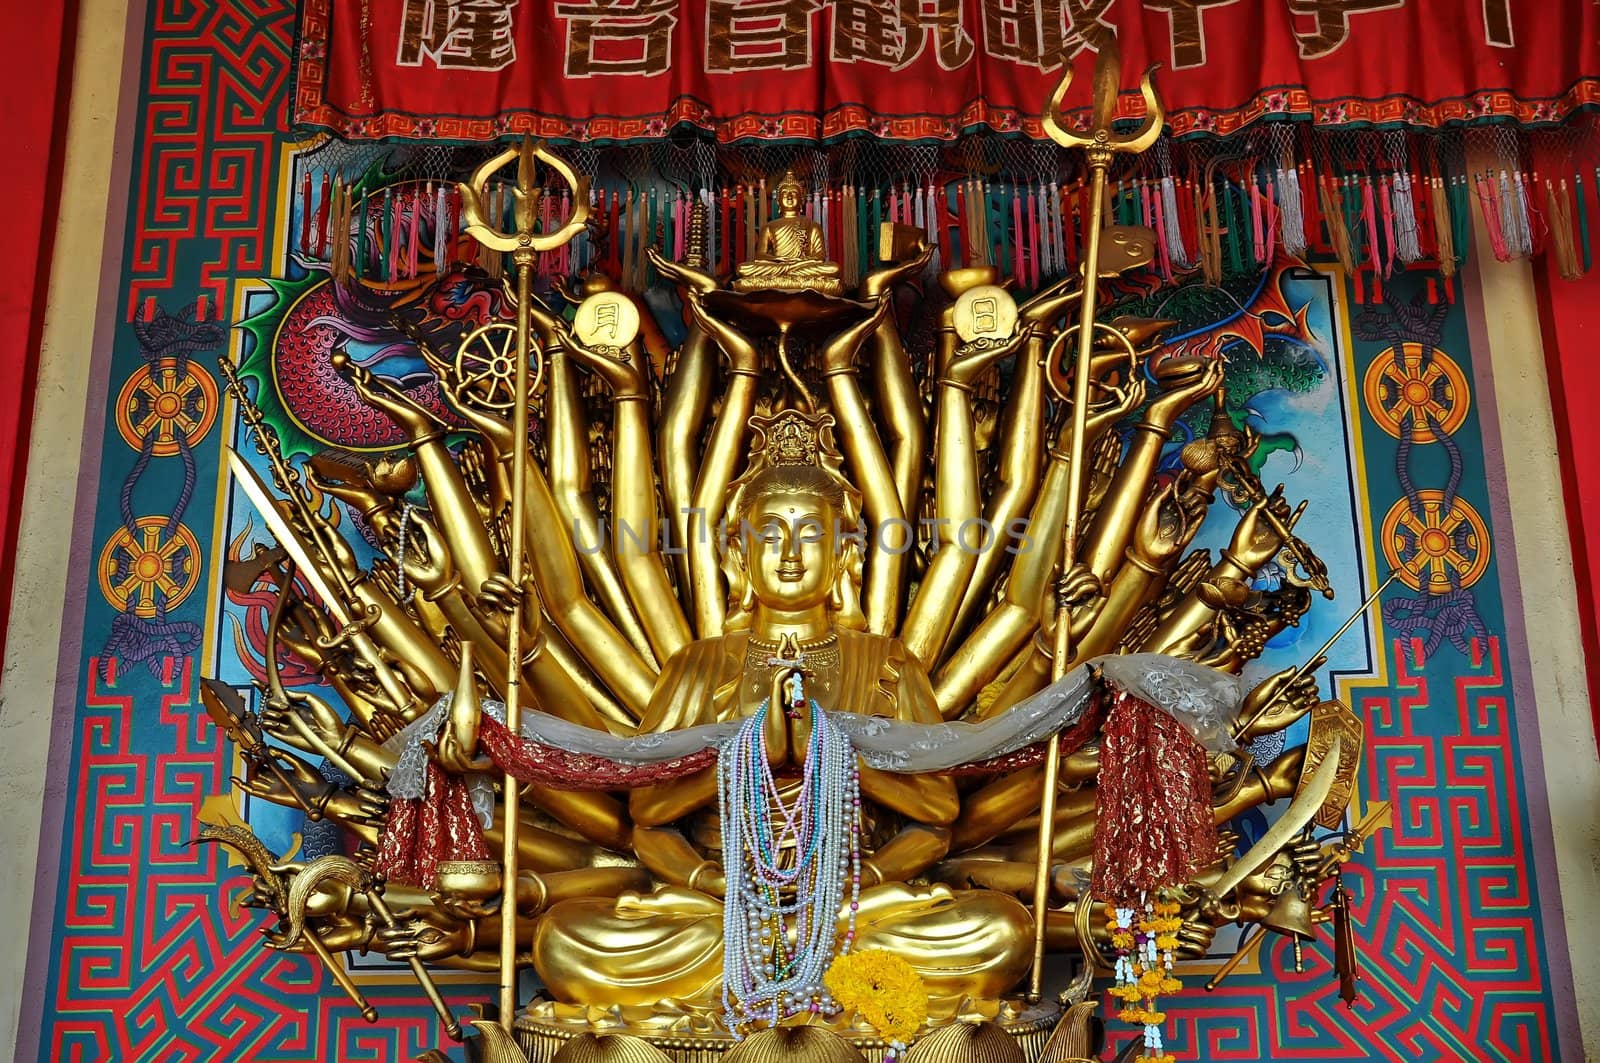 Kuan Yin image of buddha with thousand hands statue 